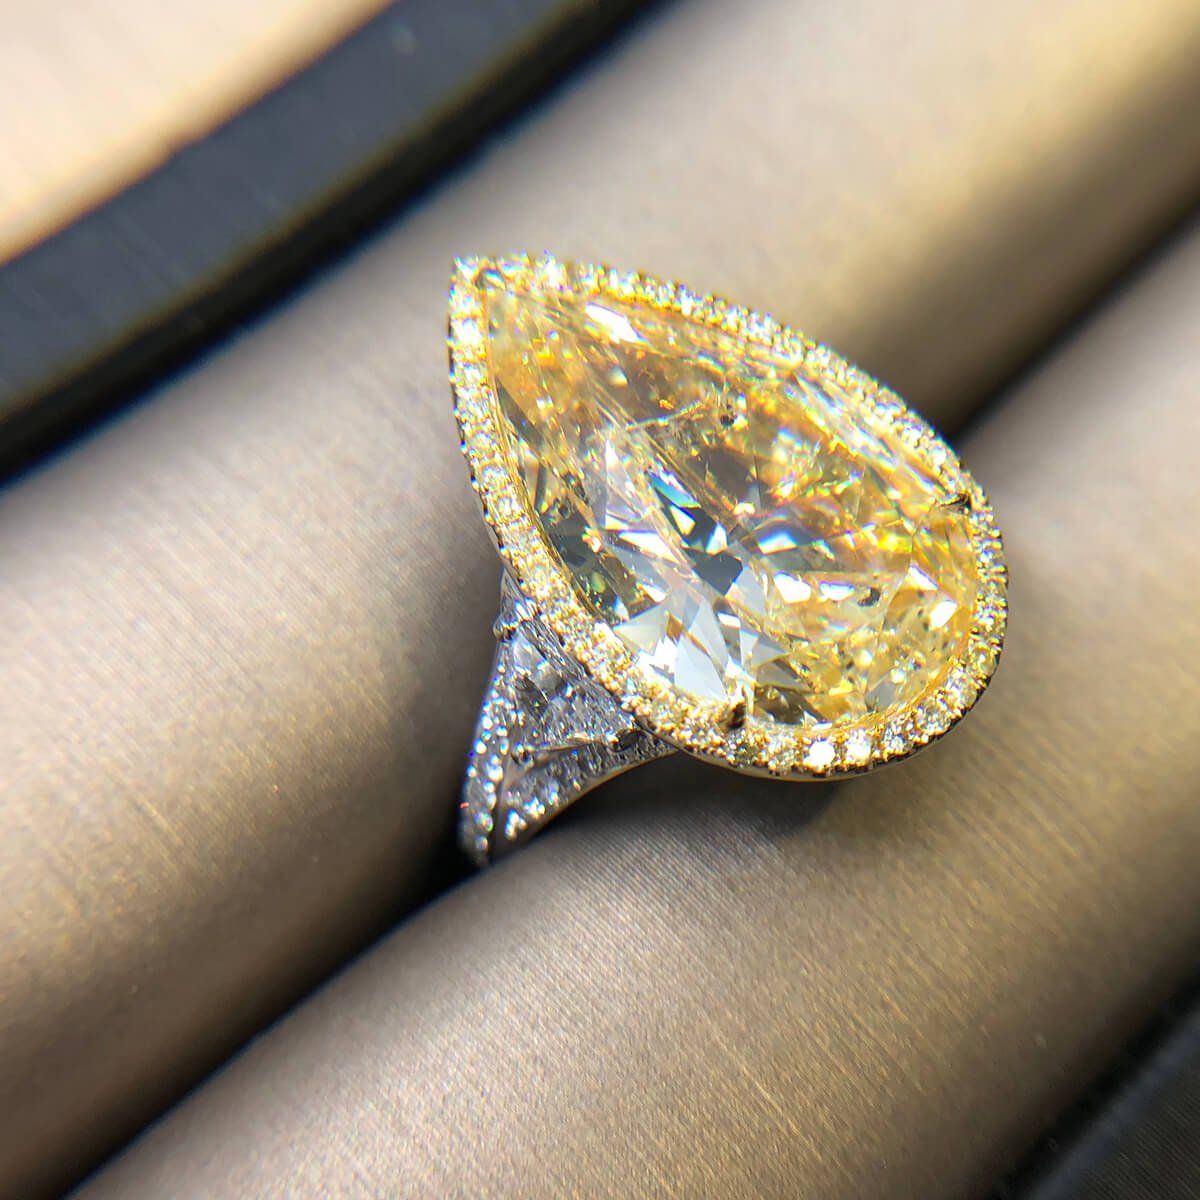 Fancy Light Yellow Diamond Ring, 0.90 Carat, Pear shape, GIA Certified, 2155101503